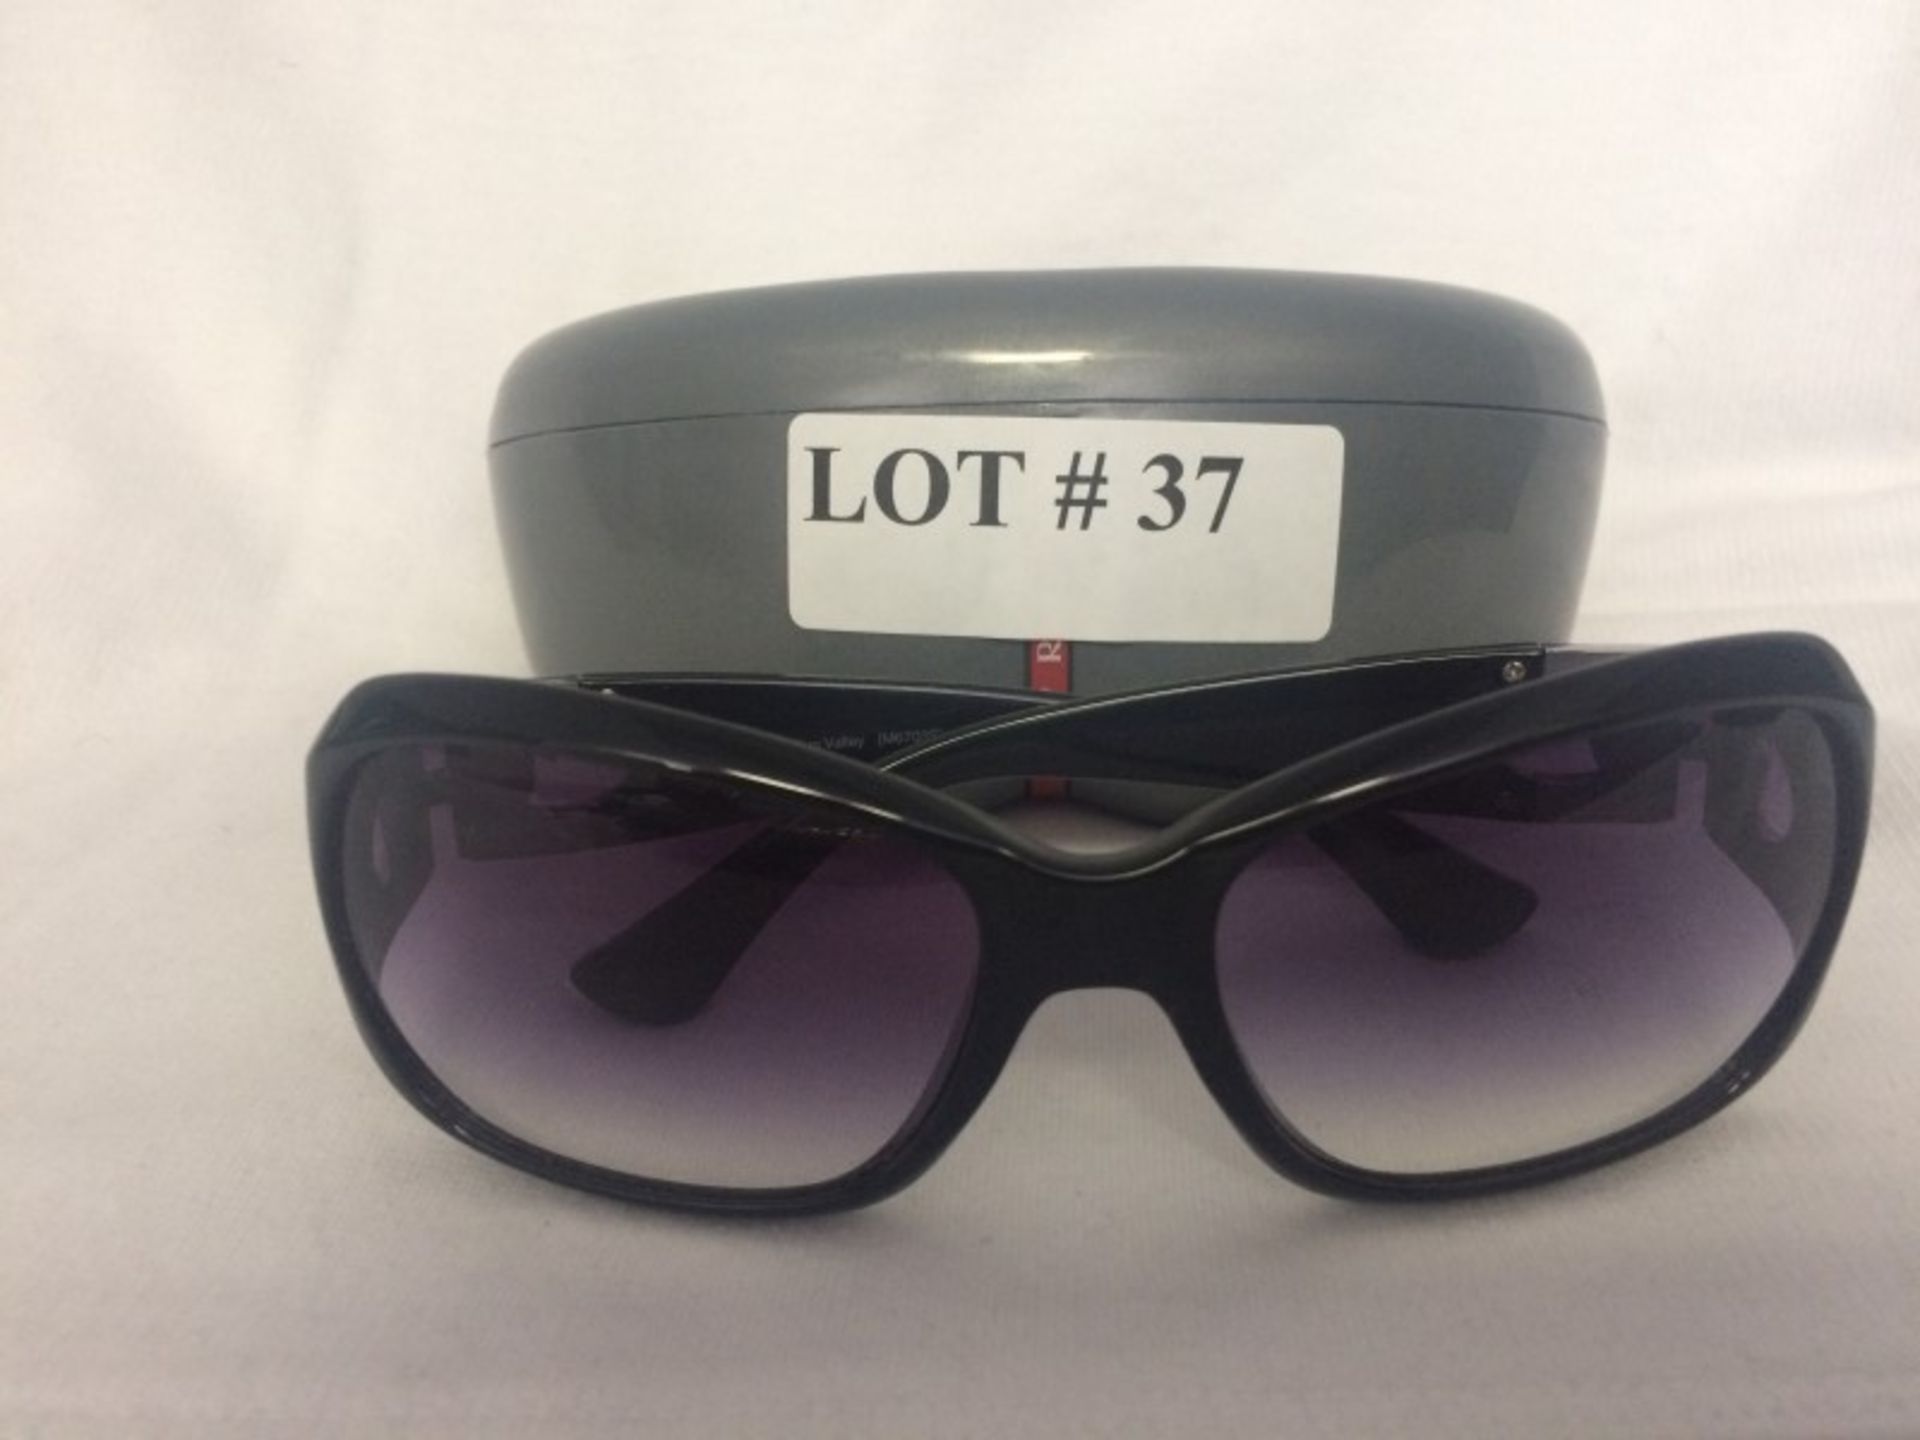 Prada Sunglasses - Retail $160.00